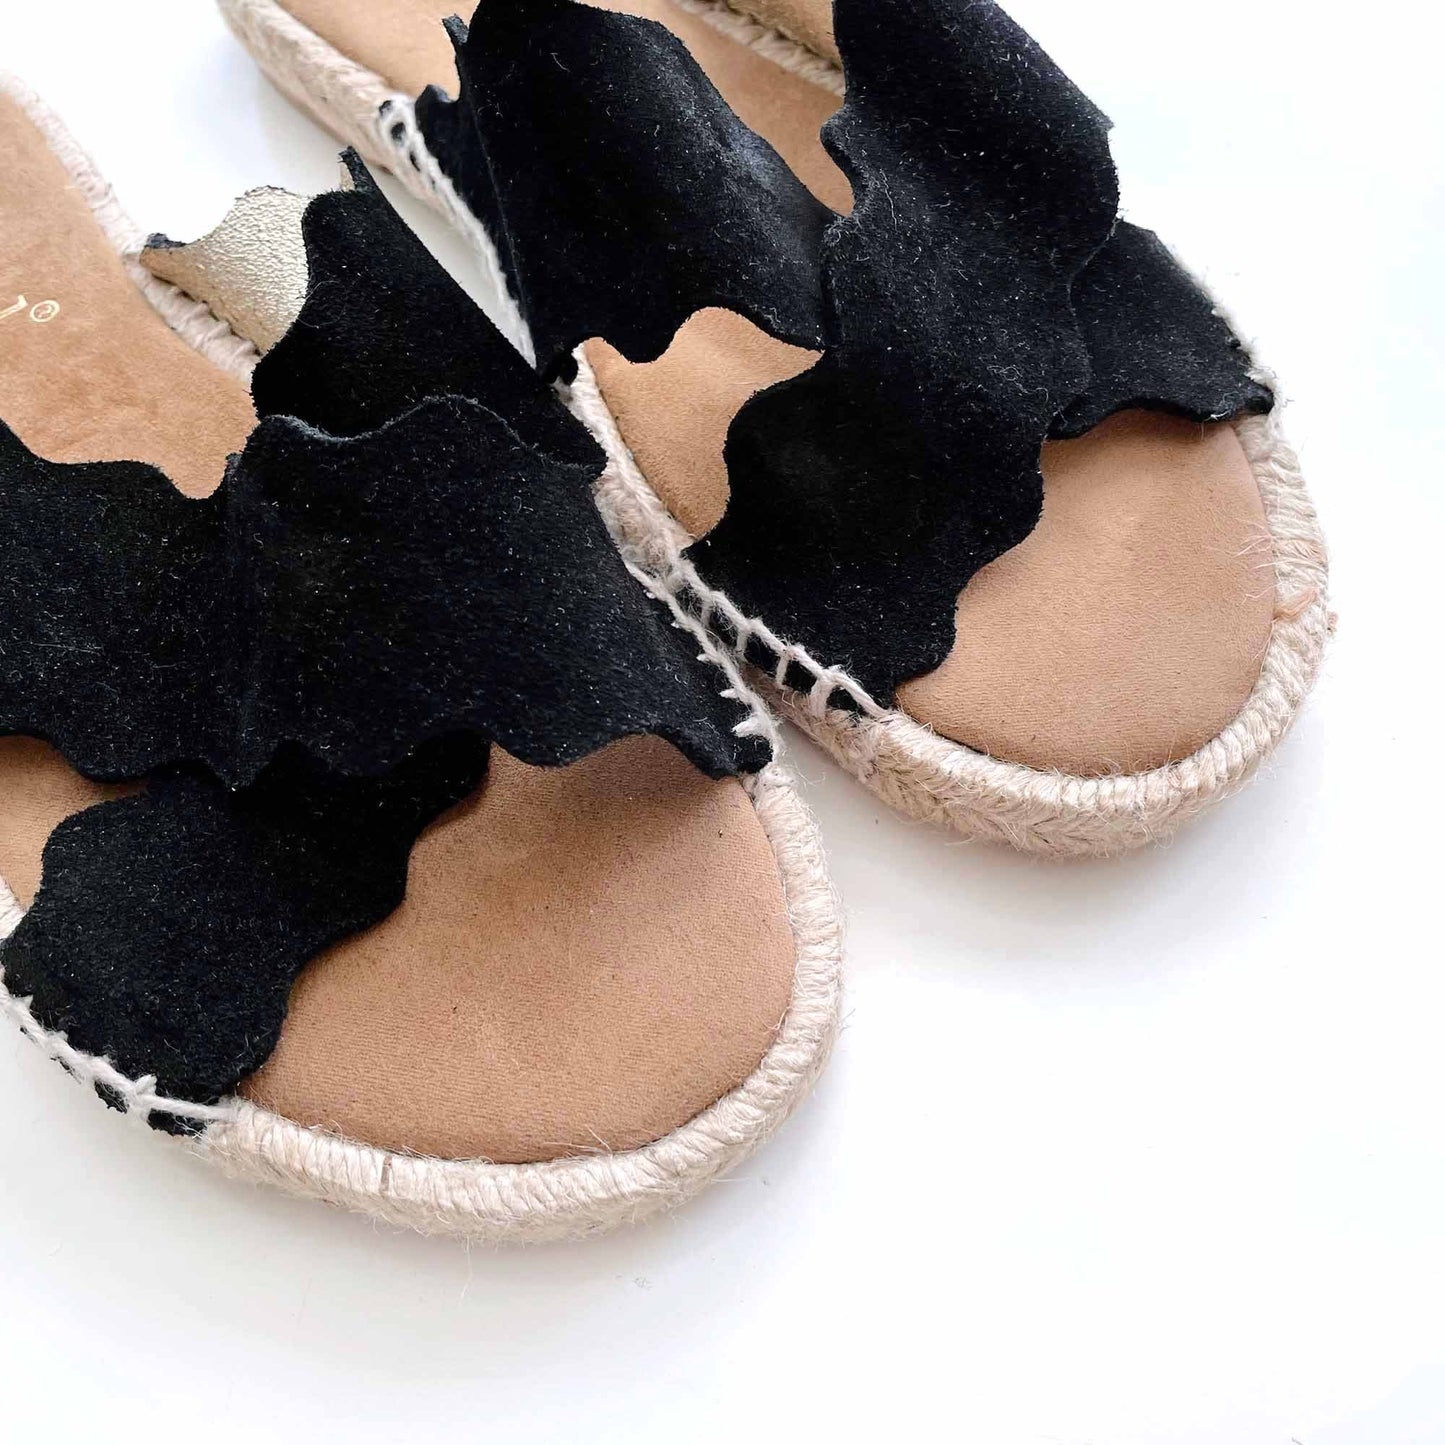 maypol suede criss-cross espadrilles sandals - size 40